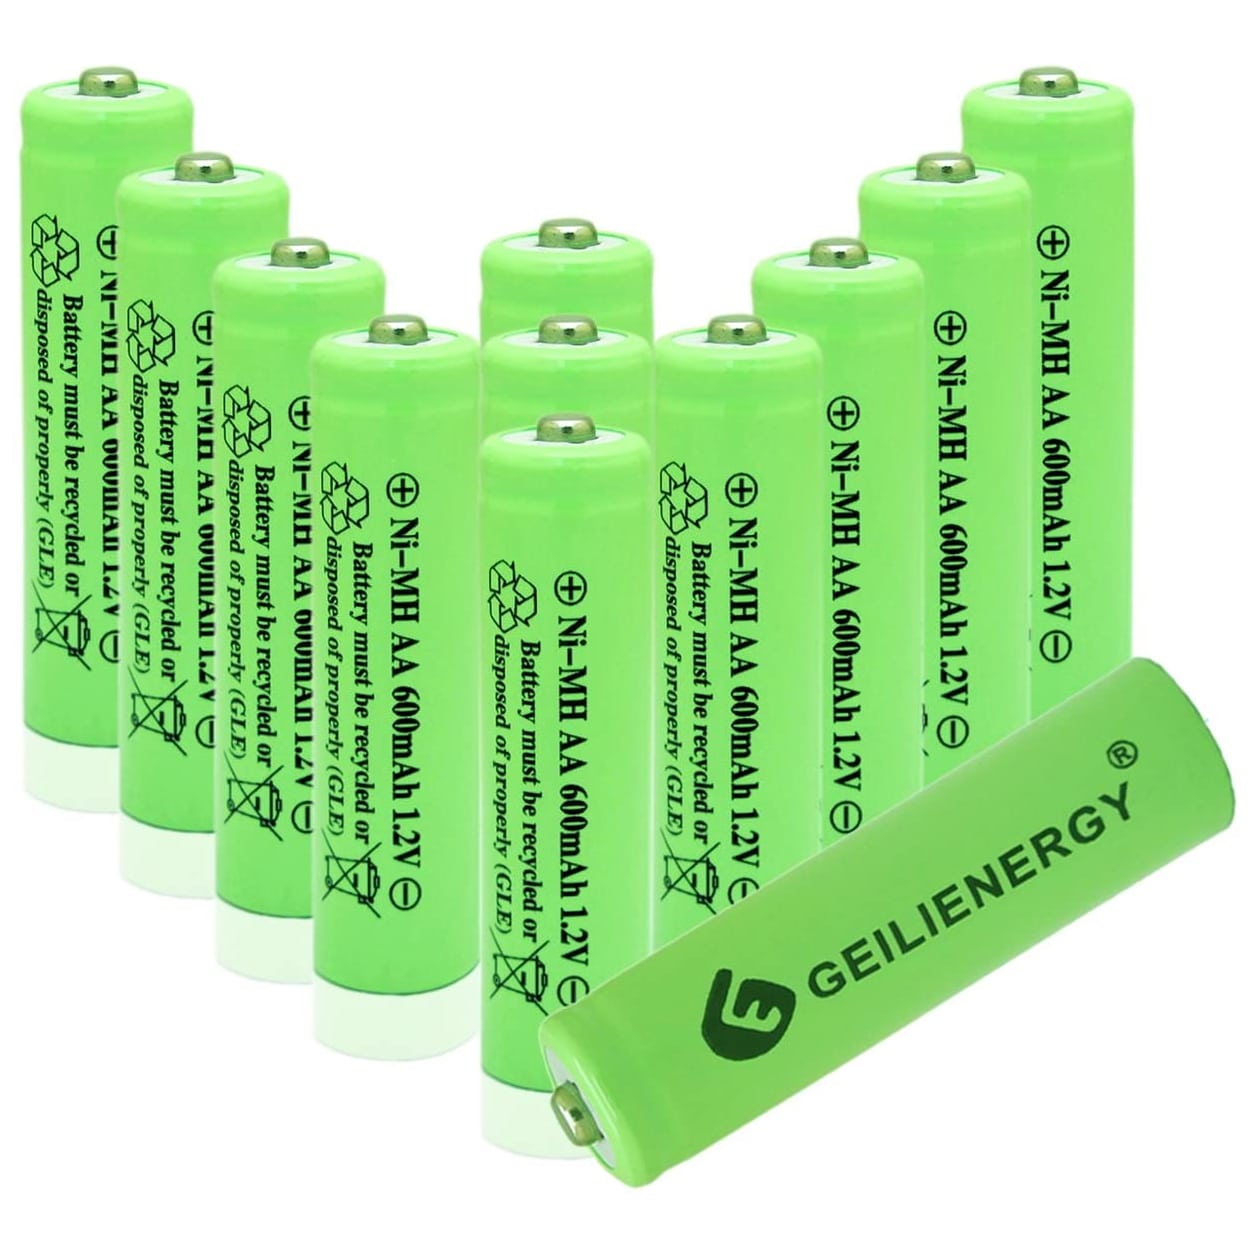 Geilienergy NiMH Rechargeable Batteries